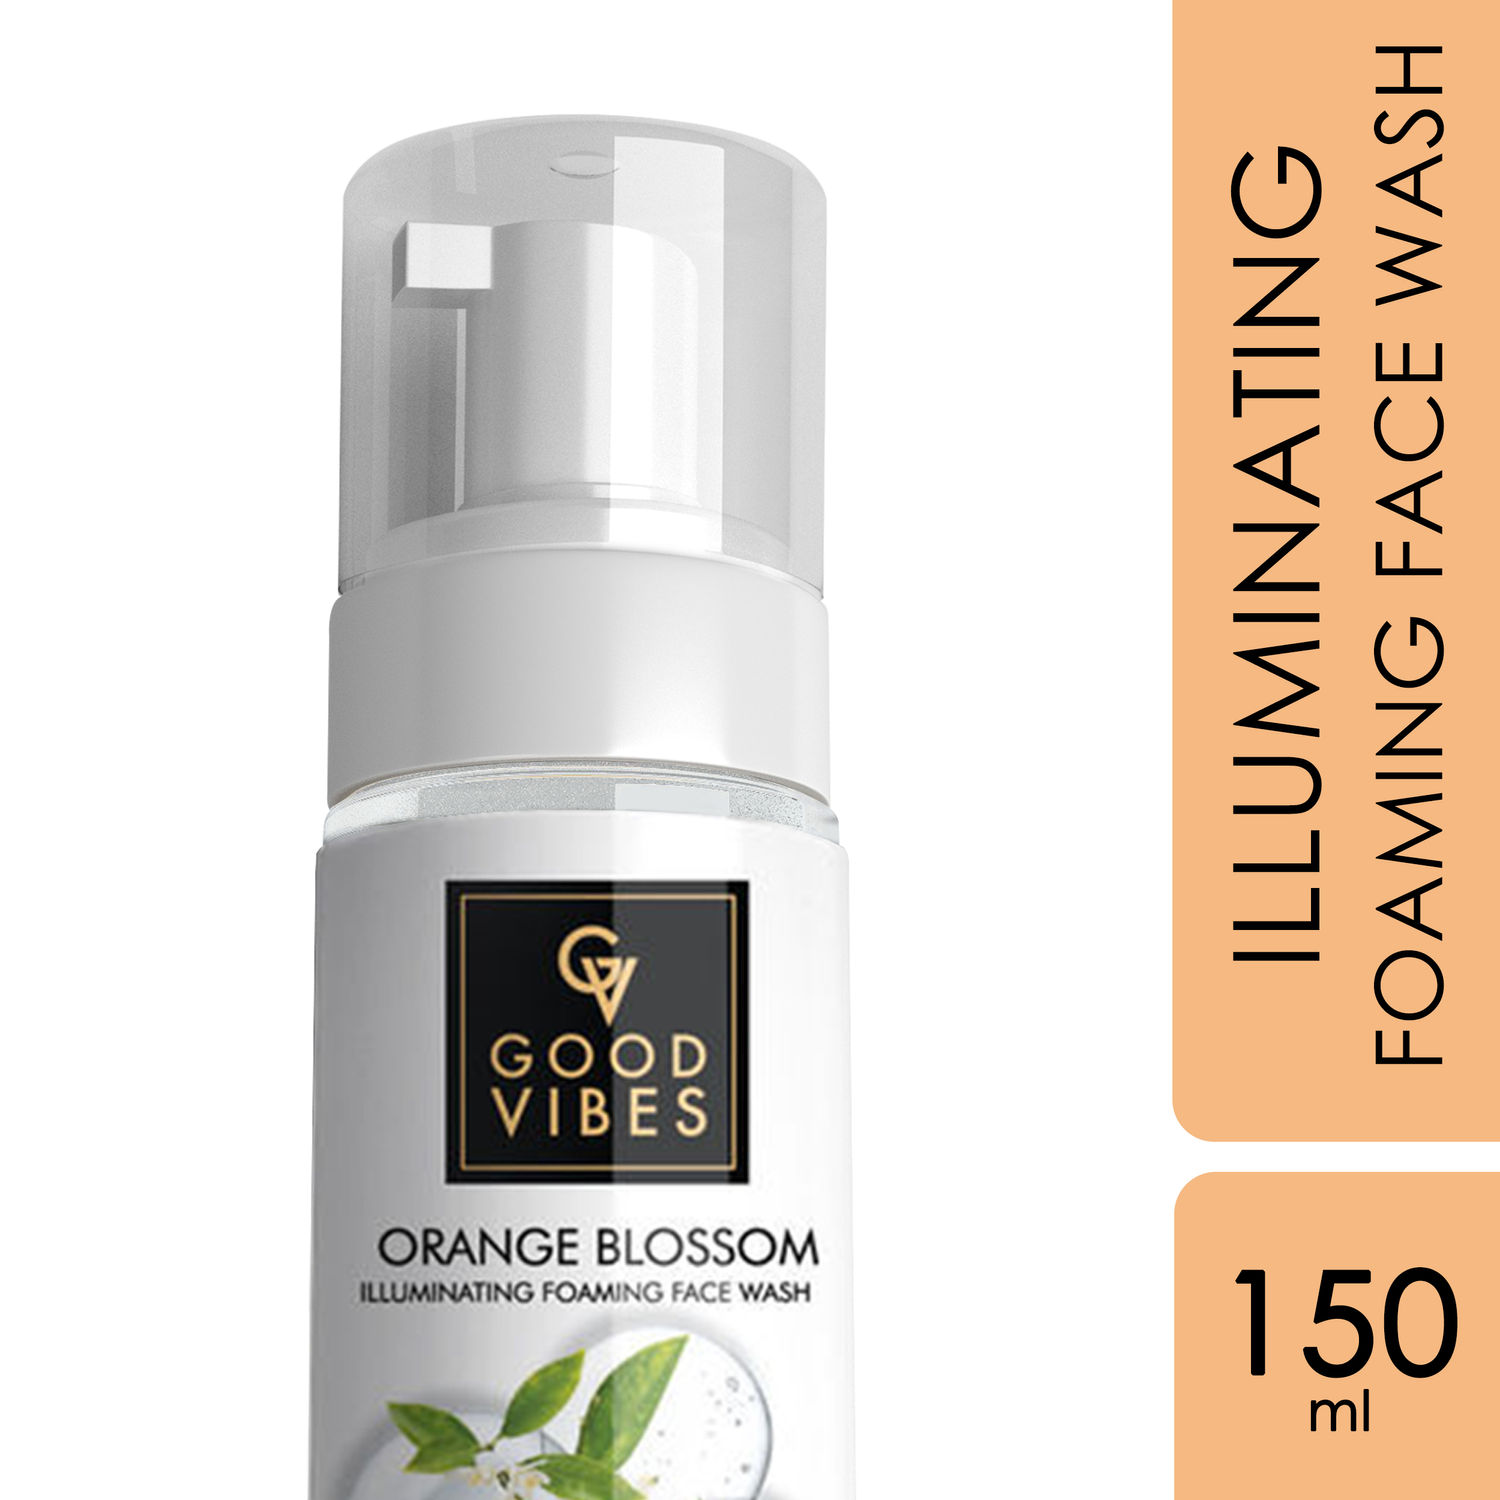 Buy Good Vibes Illuminating Foaming Face Wash - Orange Blossom (150ml) - Purplle